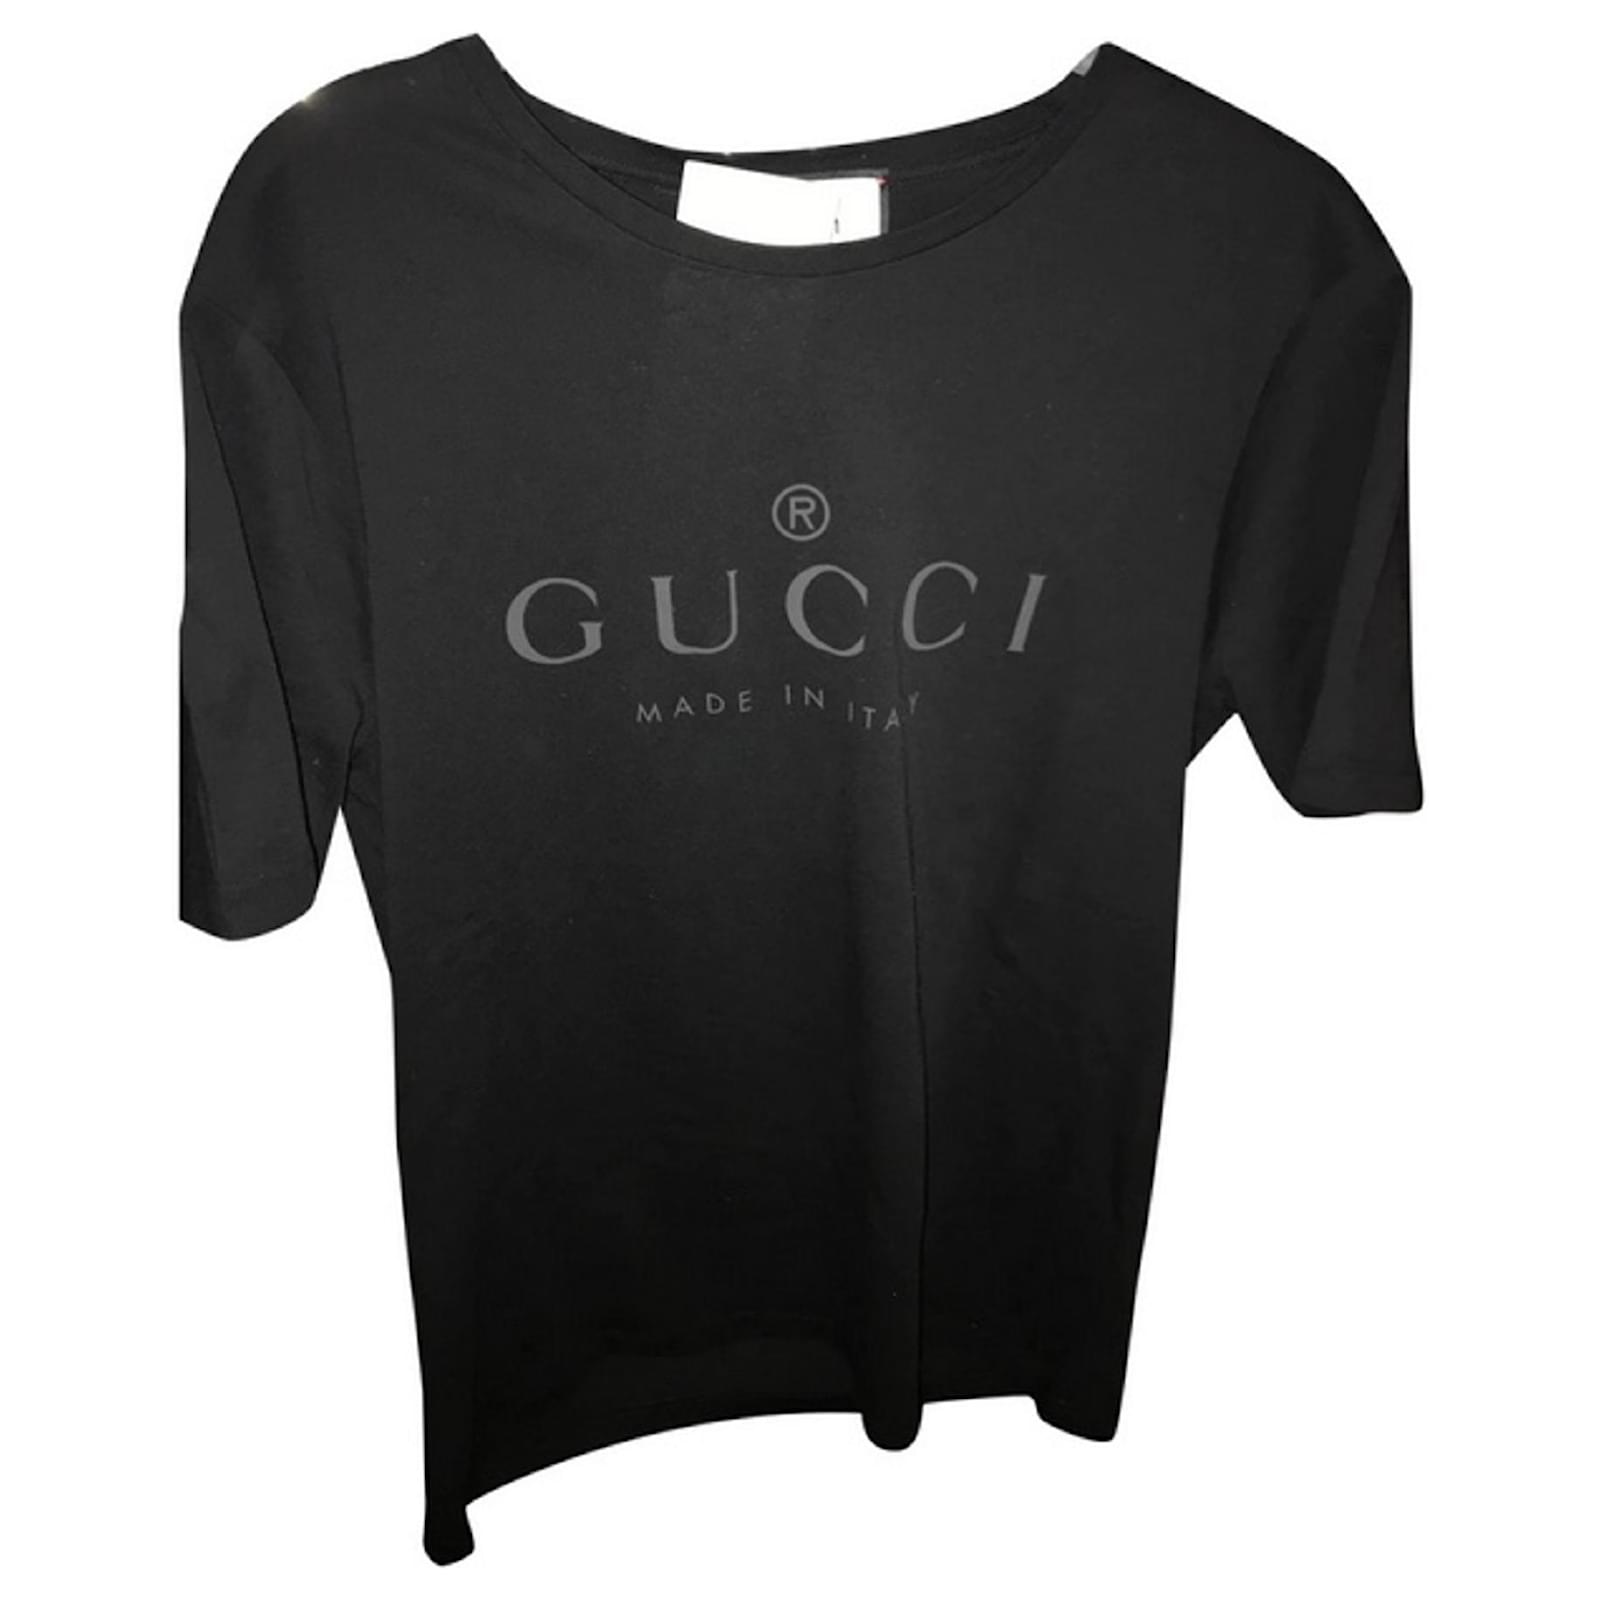 gucci t shirt new